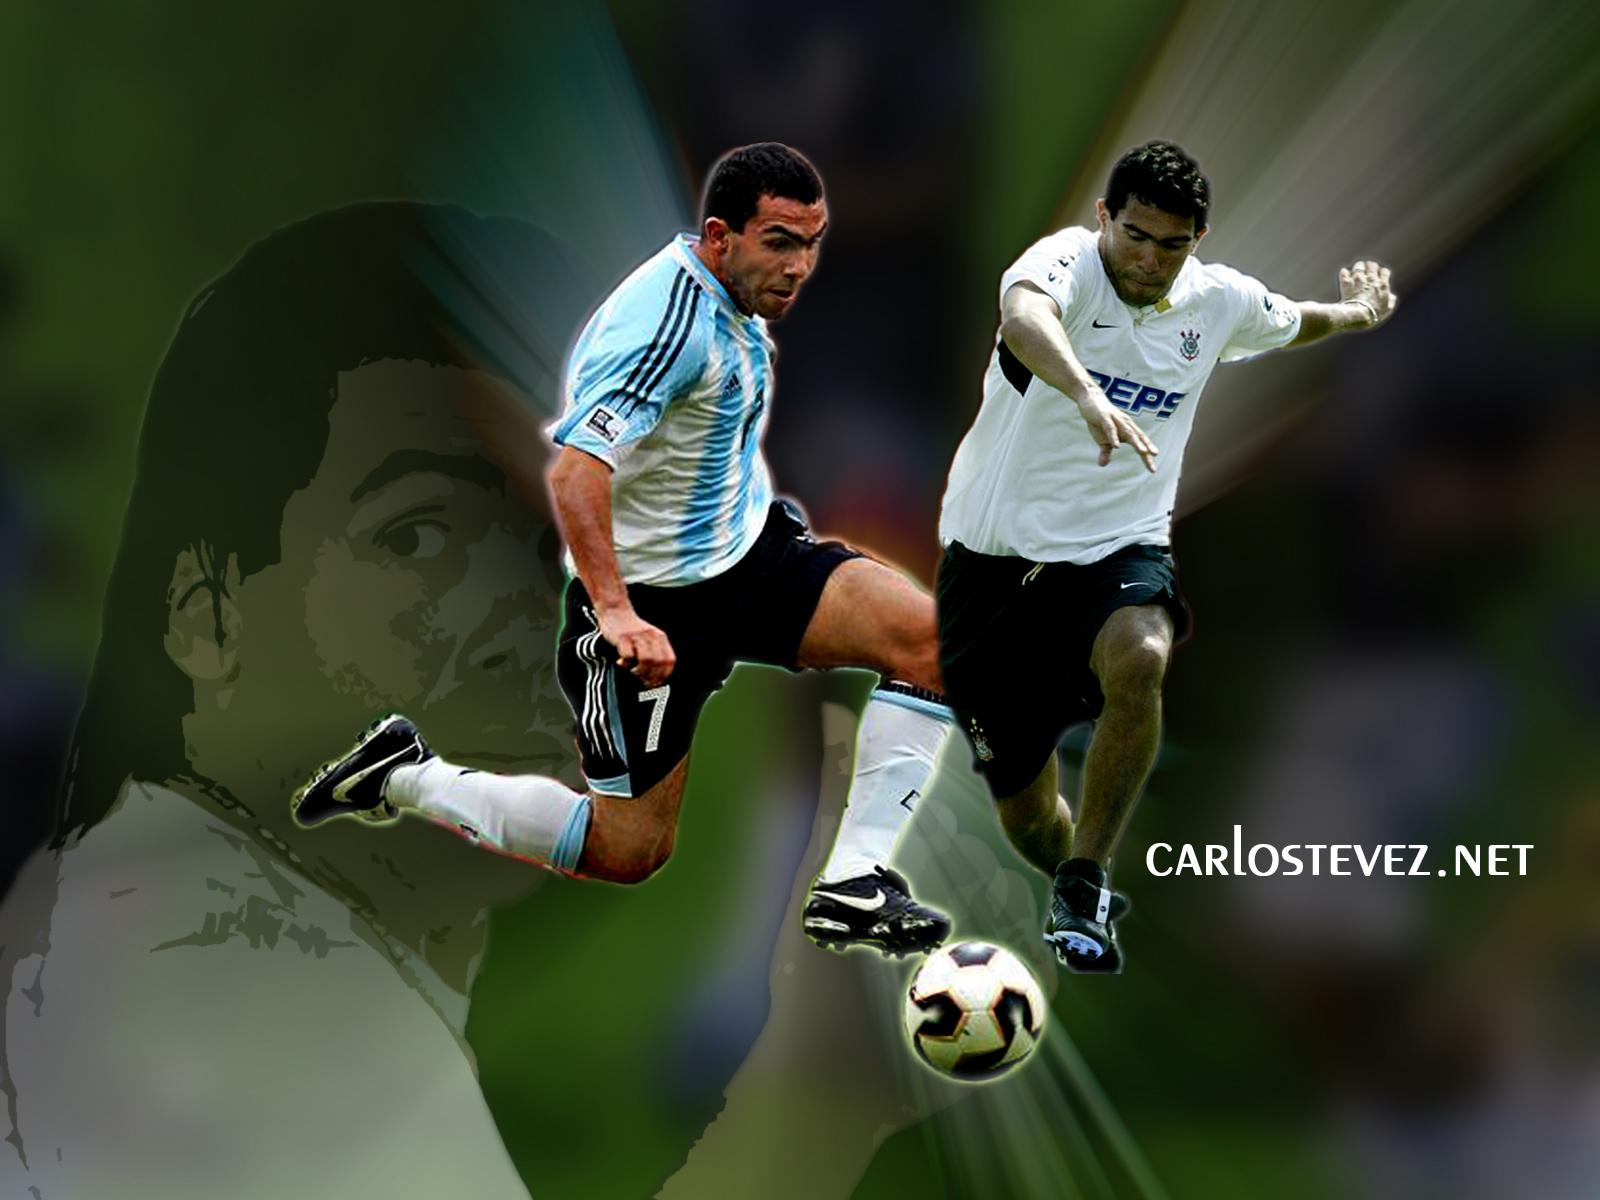 Carlos Tevez Wallpaper | Football Player Gallery